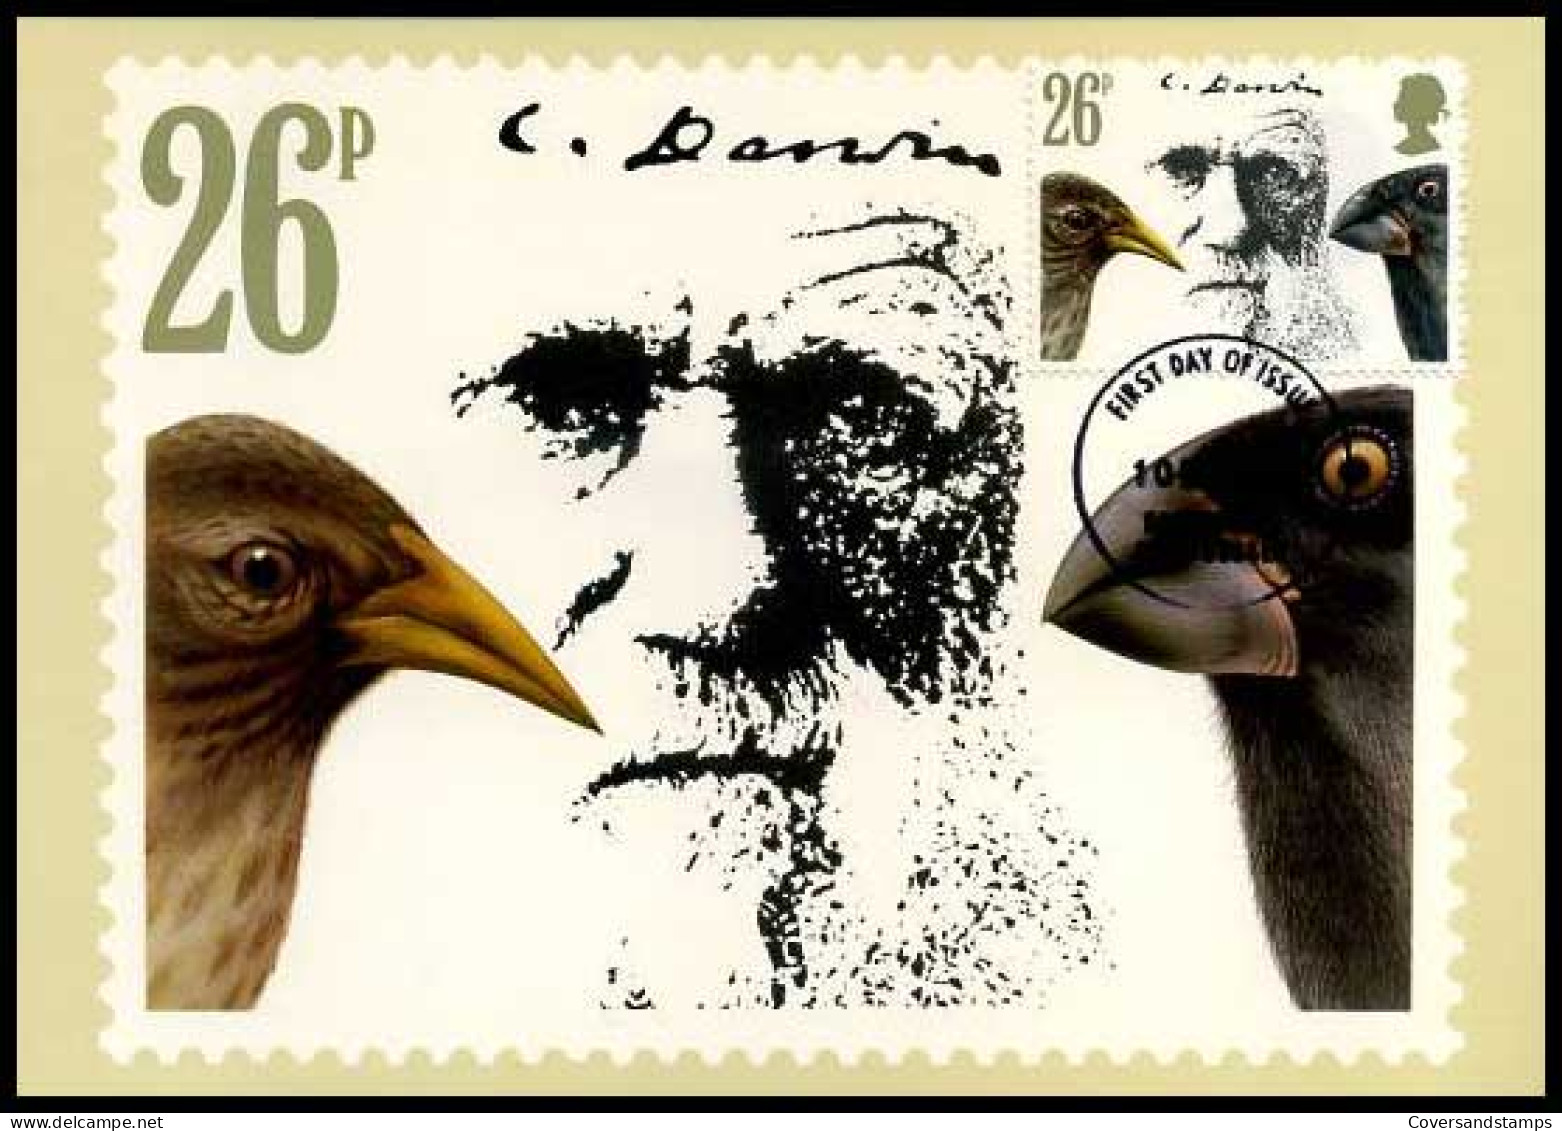 Groot-Britannië - MK - Charles Darwin                               - Maximumkarten (MC)